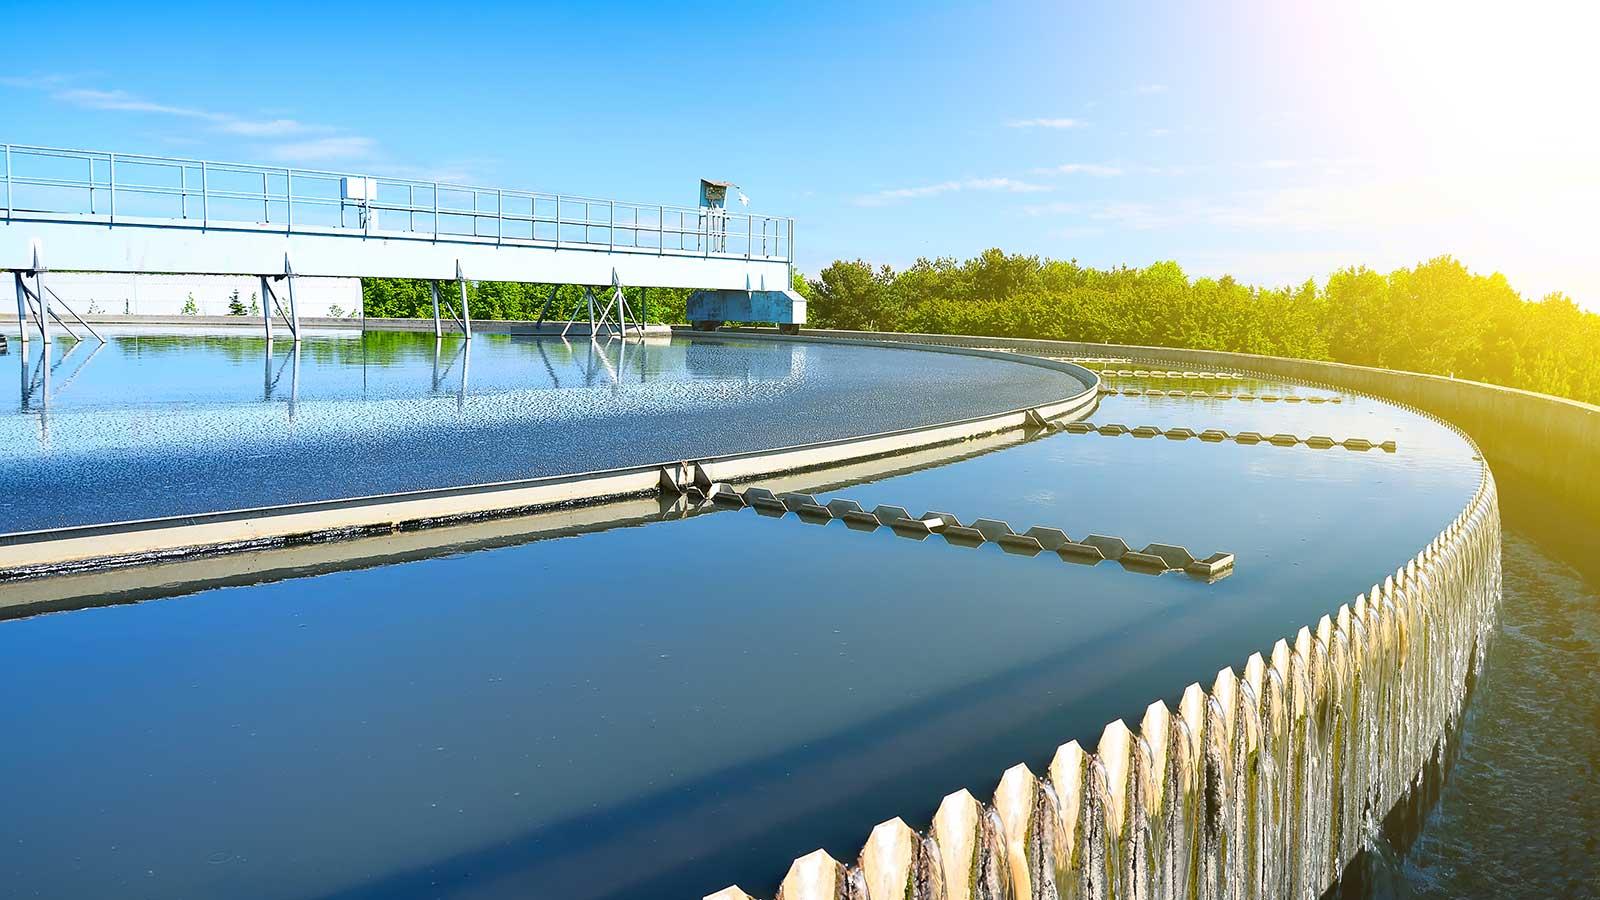 man-made dam / water system representing engineering studies at Clarkson university